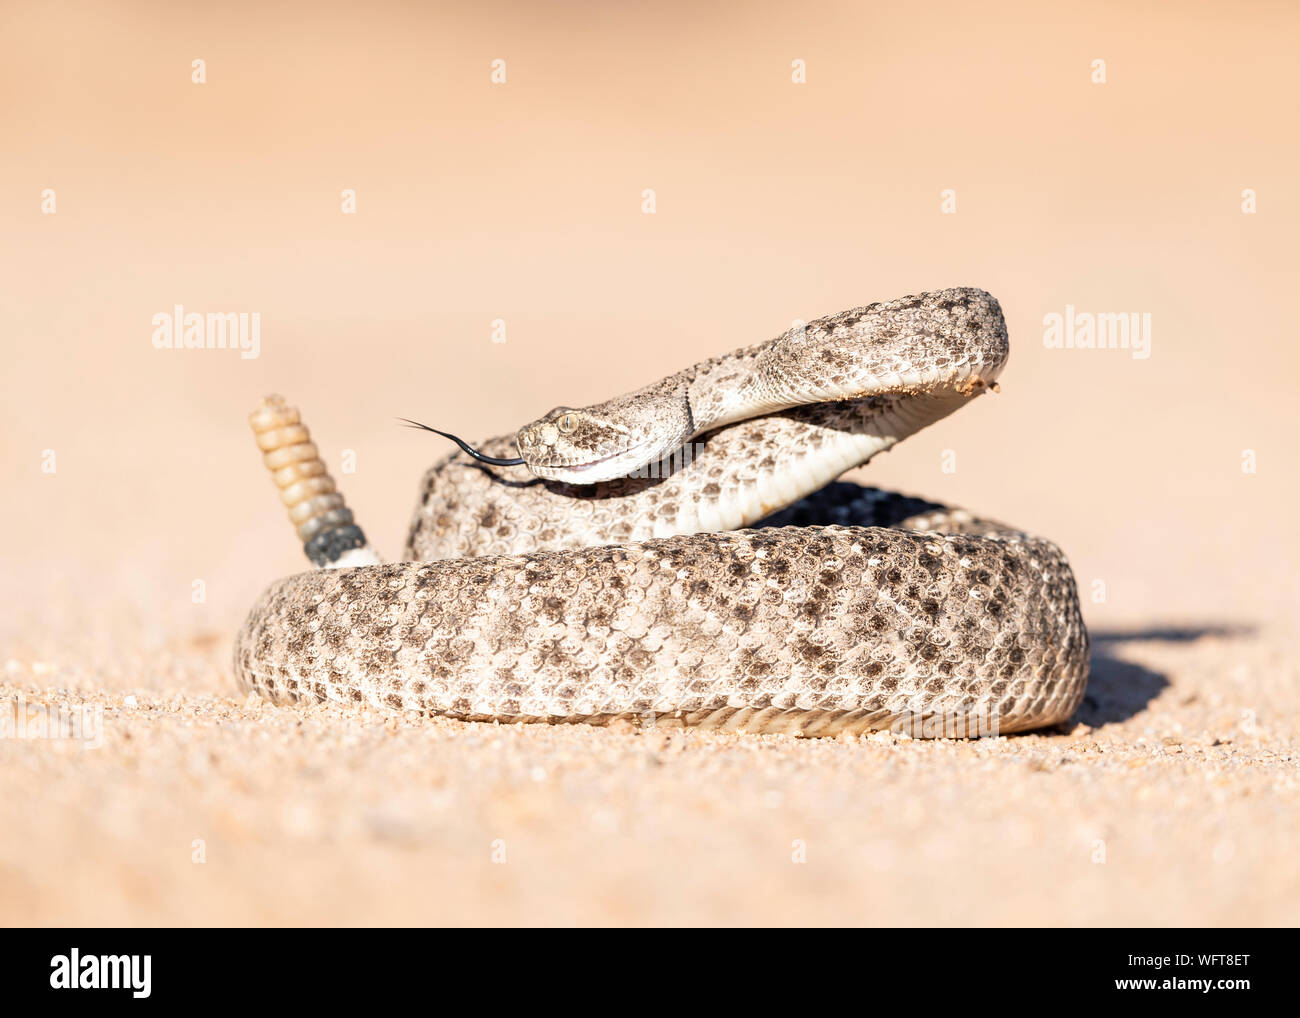 Western Diamondback Rattlesnake nel deserto di Sonora dell'Arizona meridionale Foto Stock